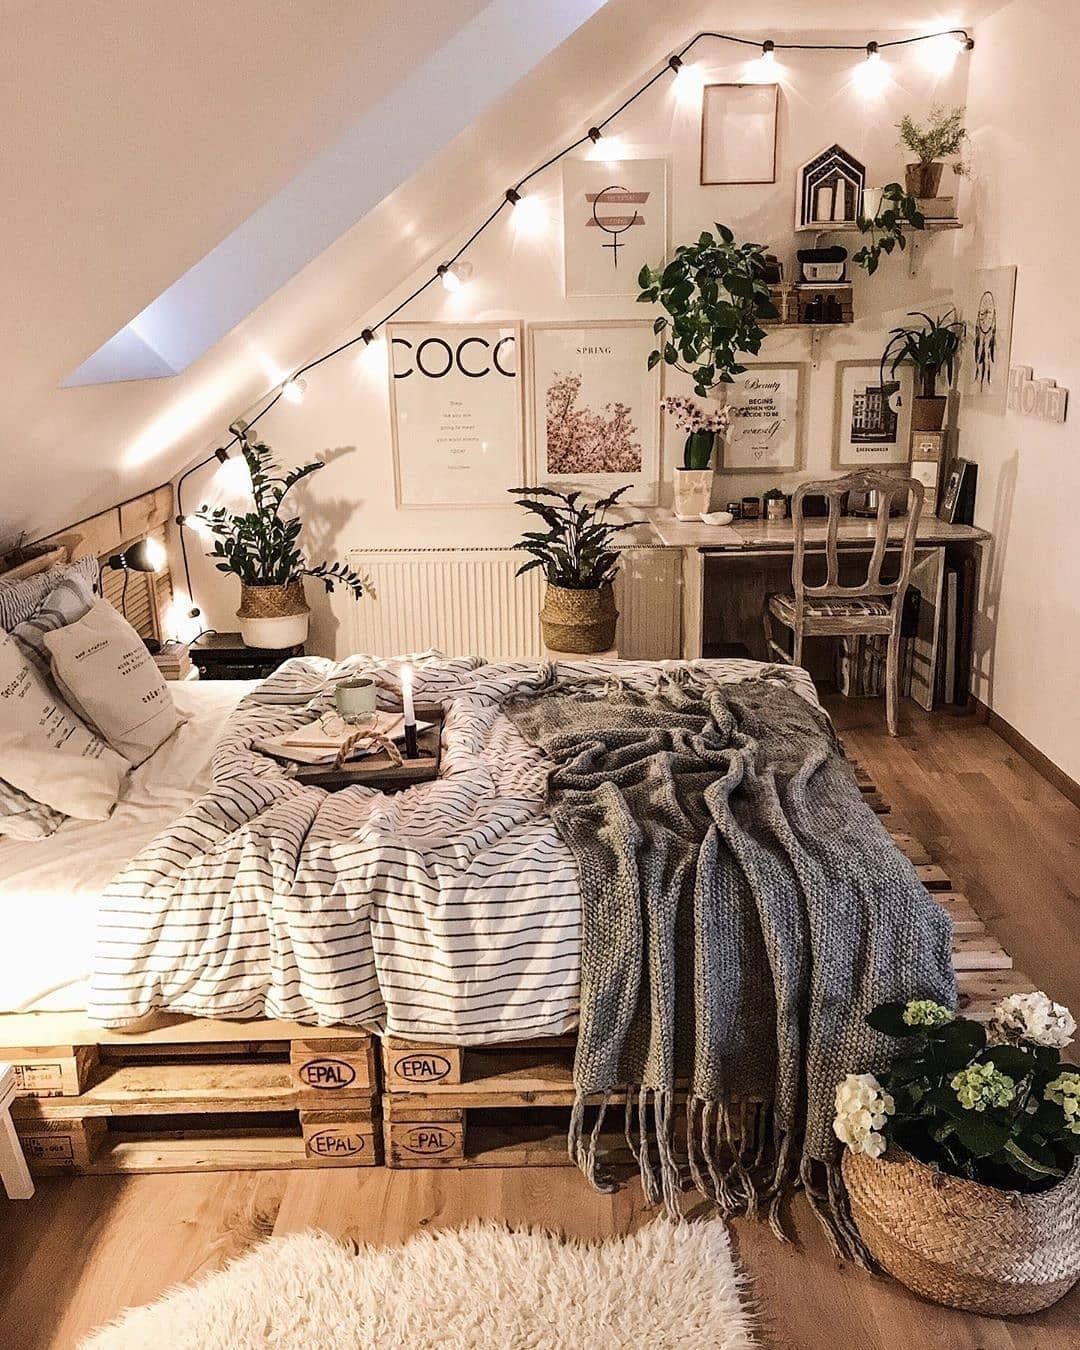 11 room decor Bohemian bedding ideas